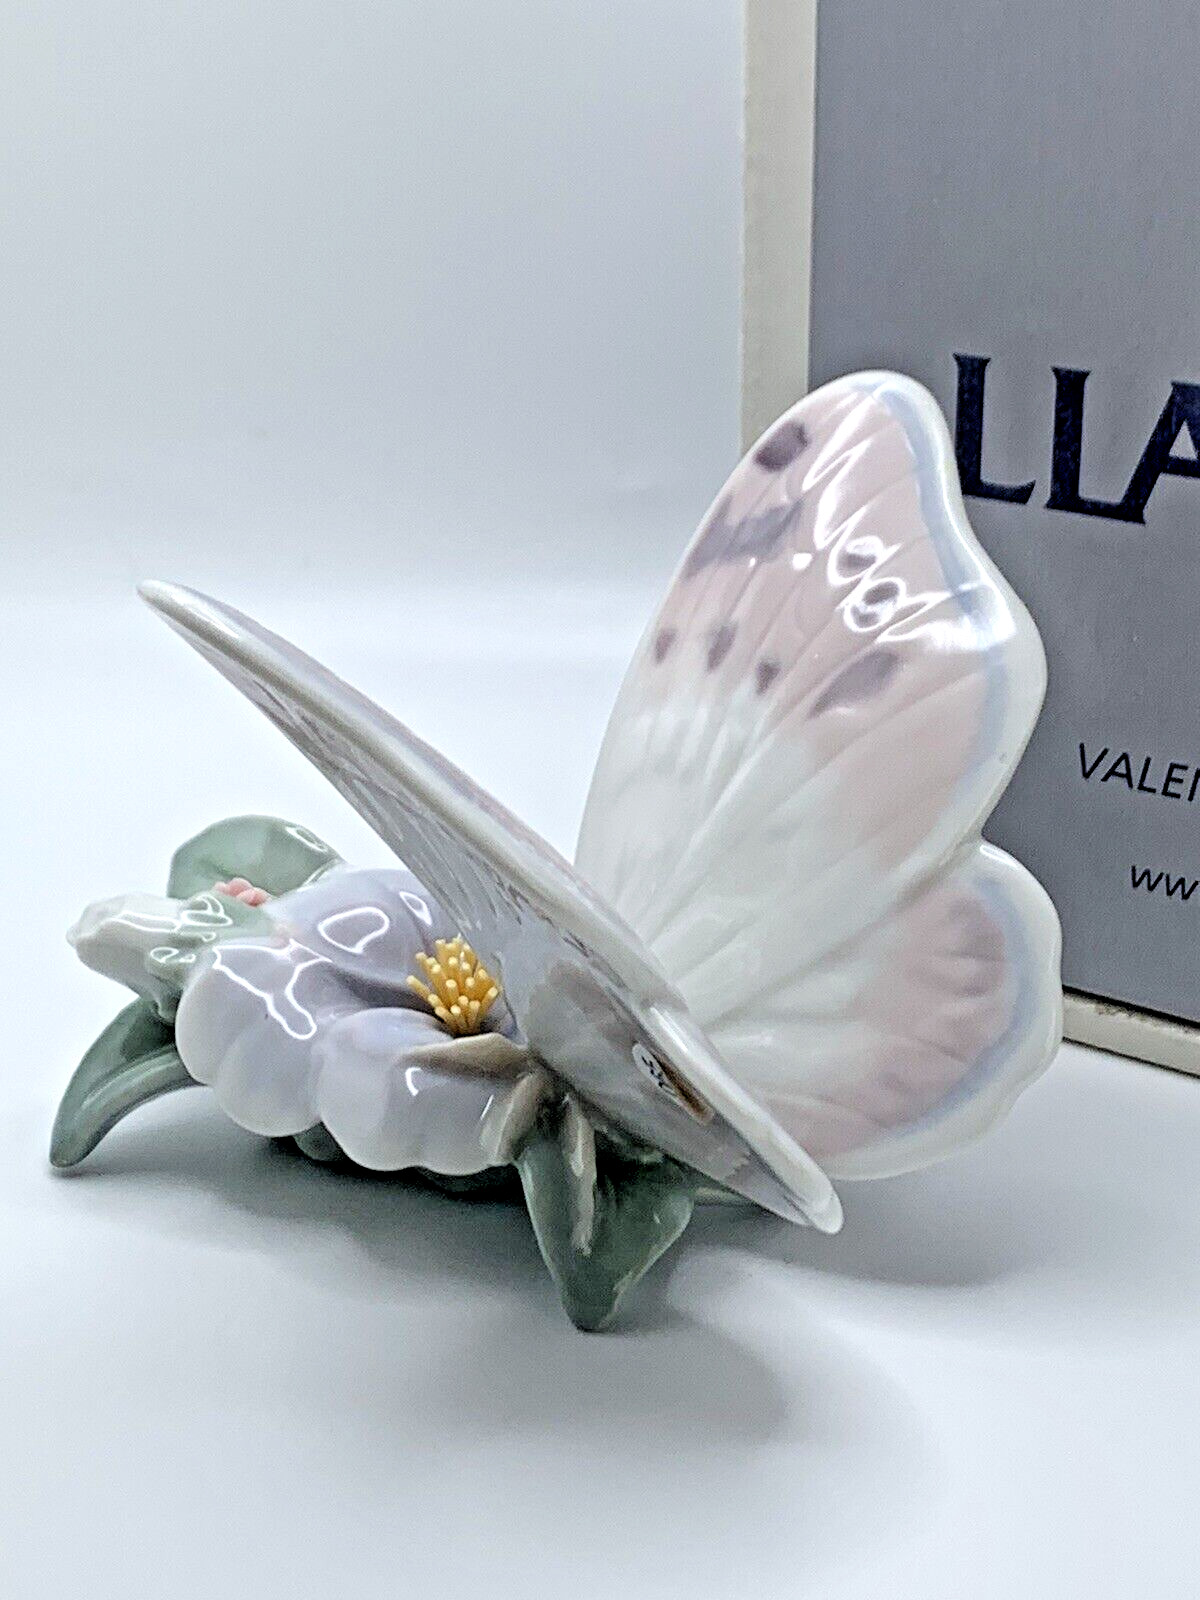 LLadro Spain Figurine # 6330 Refreshing Pause Butterfly Original BOX Glossy